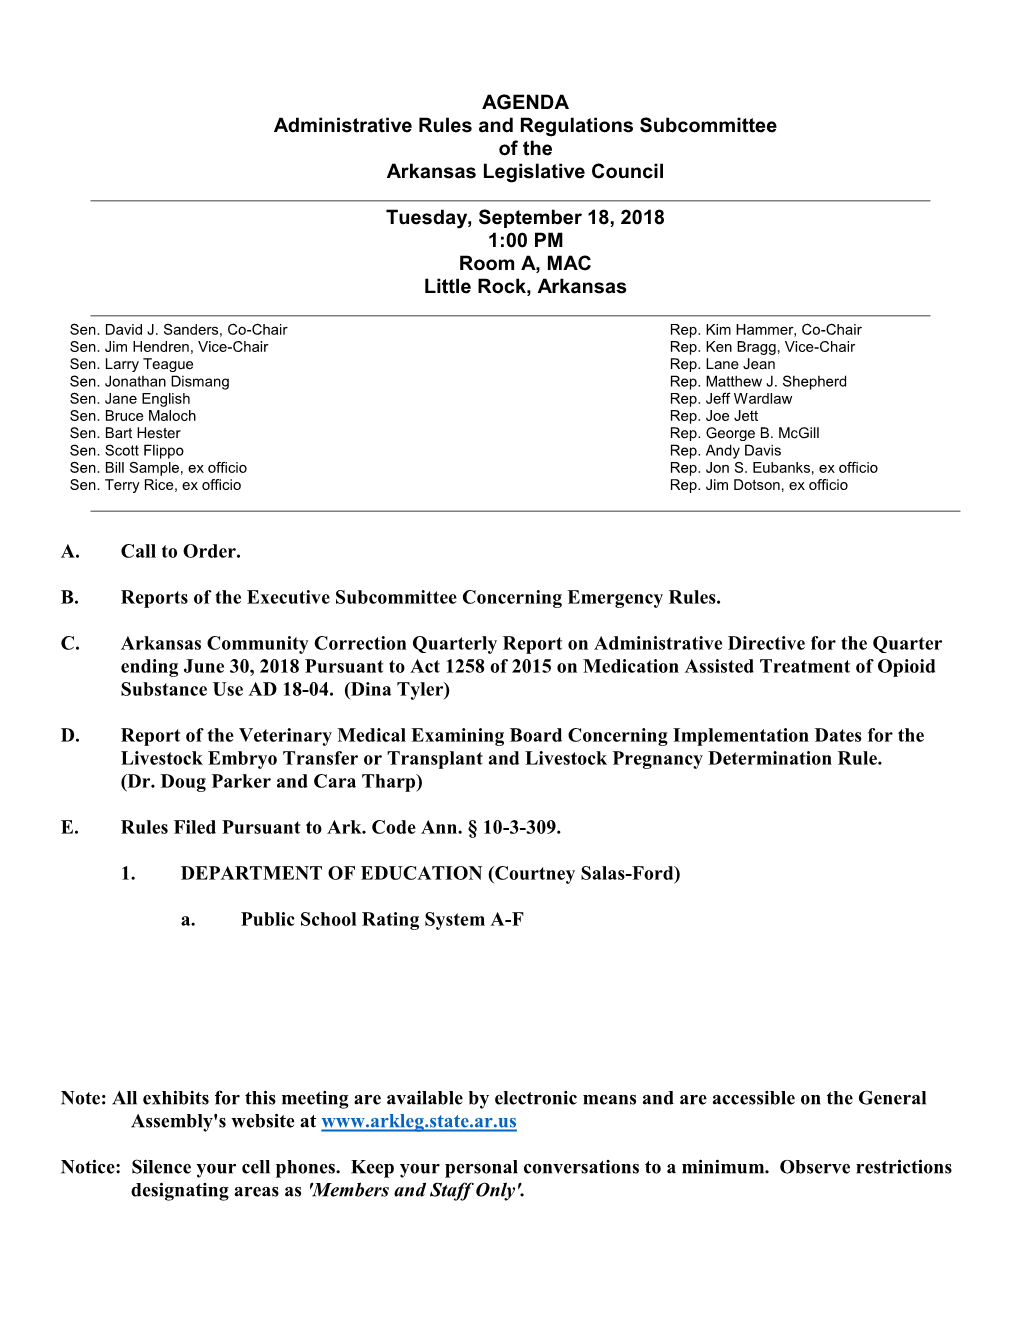 AGENDA Administrative Rules and Regulations Subcommittee of the Arkansas Legislative Council